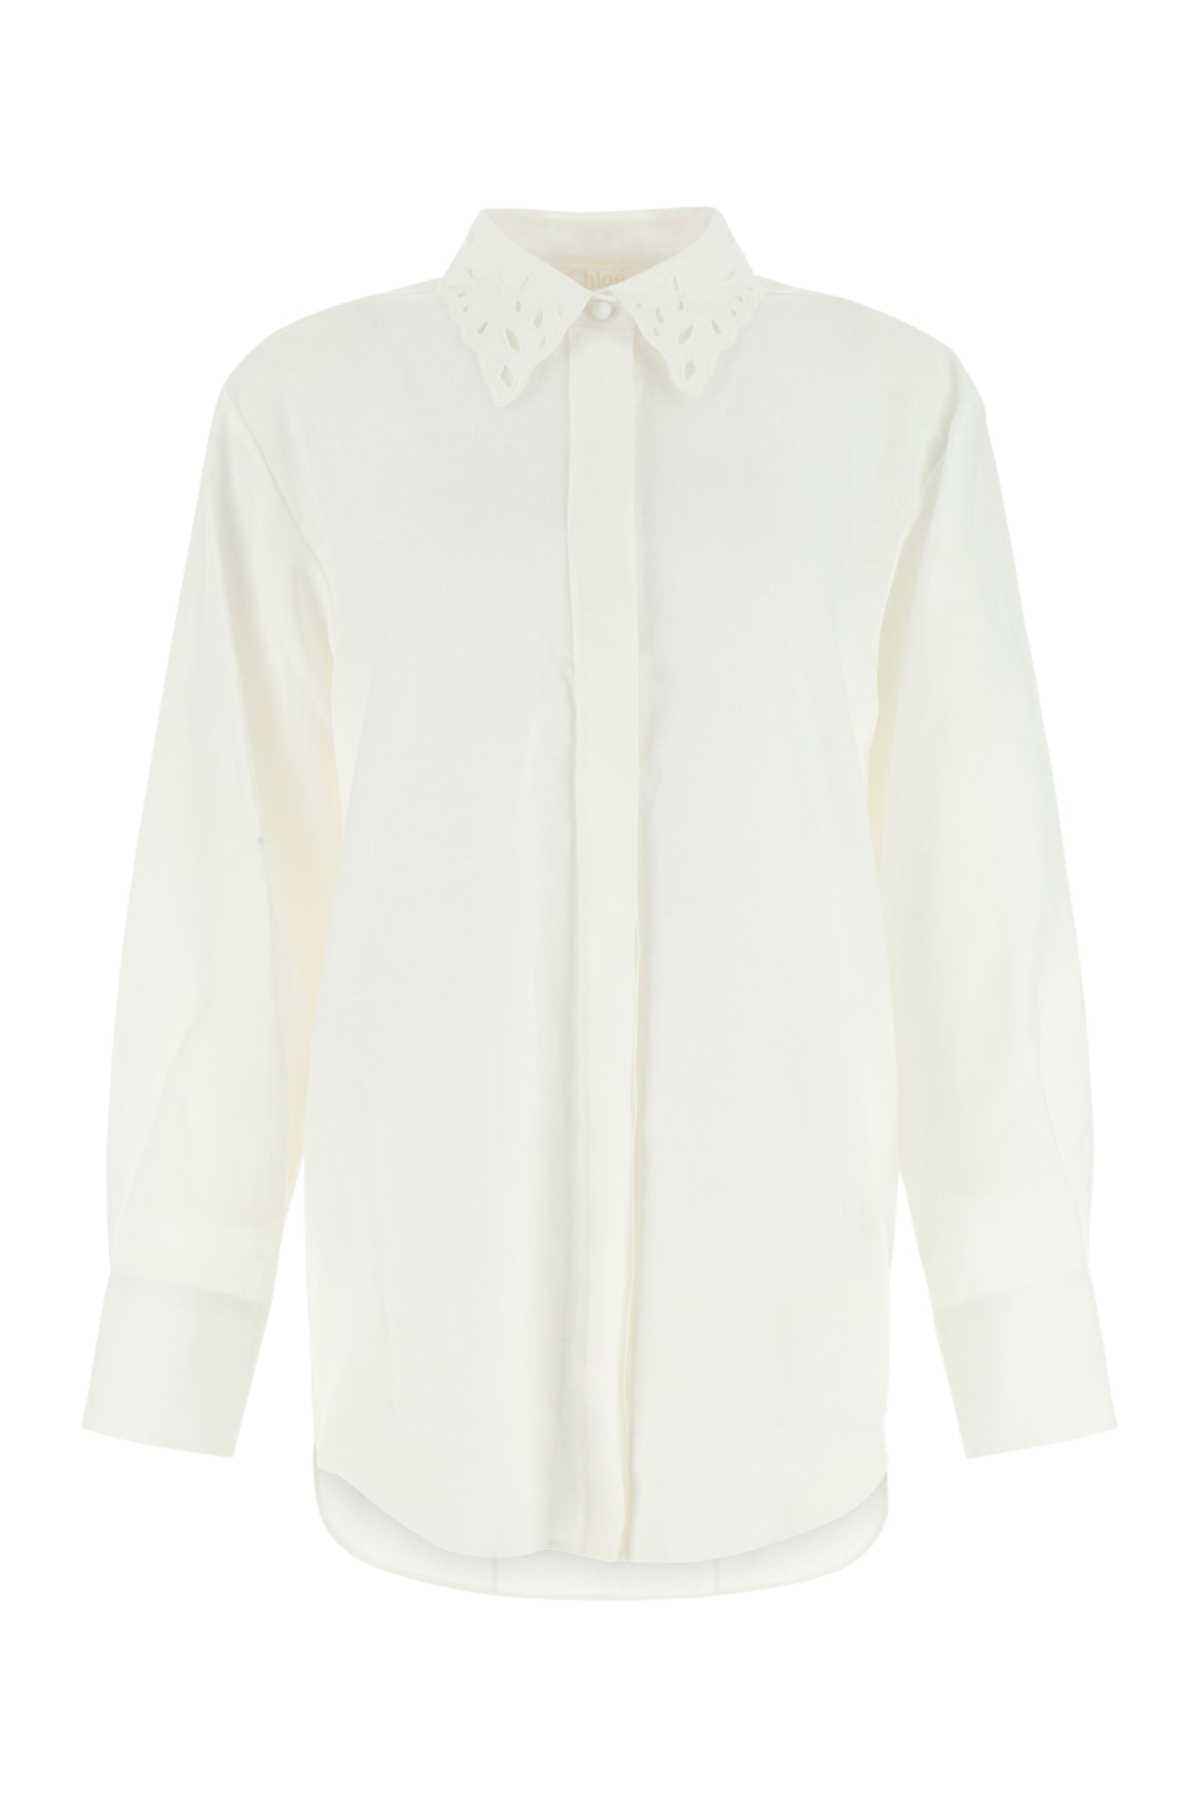 Chloé Ivory Linen Oversize Shirt